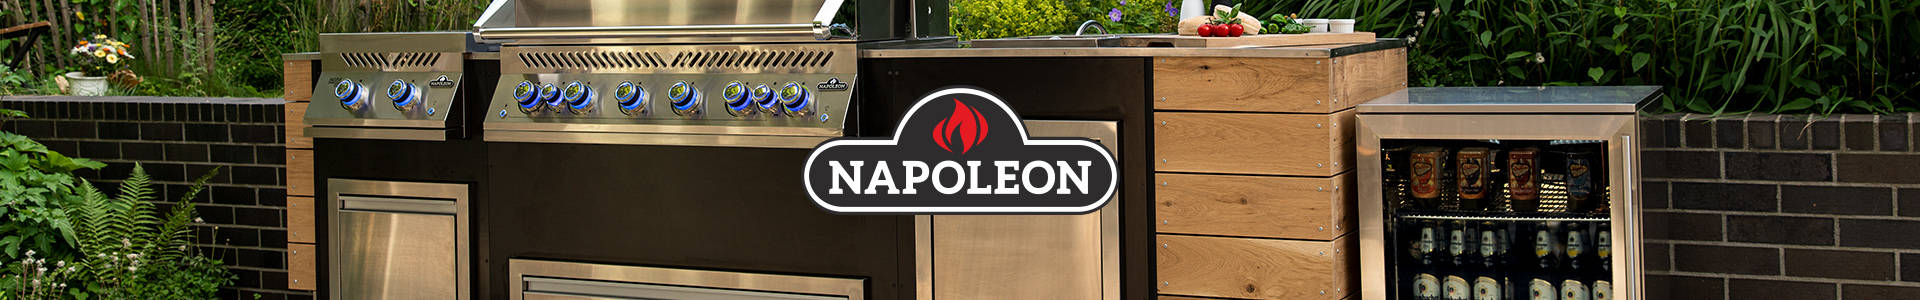 Napoleon Outdoor Kitchen Compo